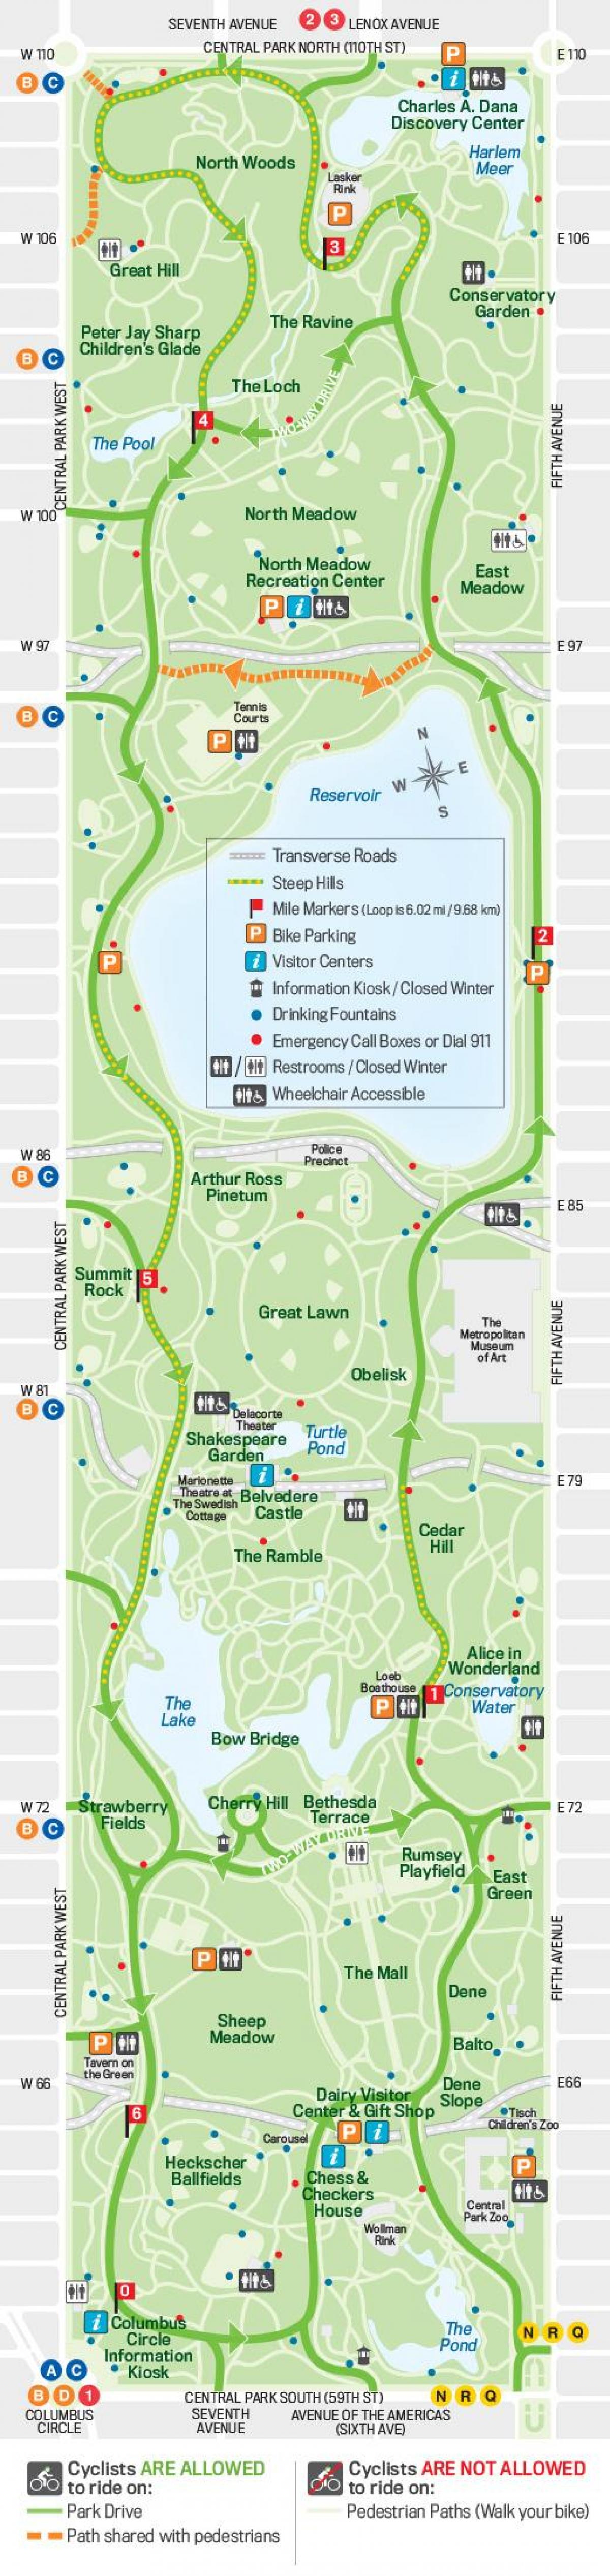 basikal peta central park